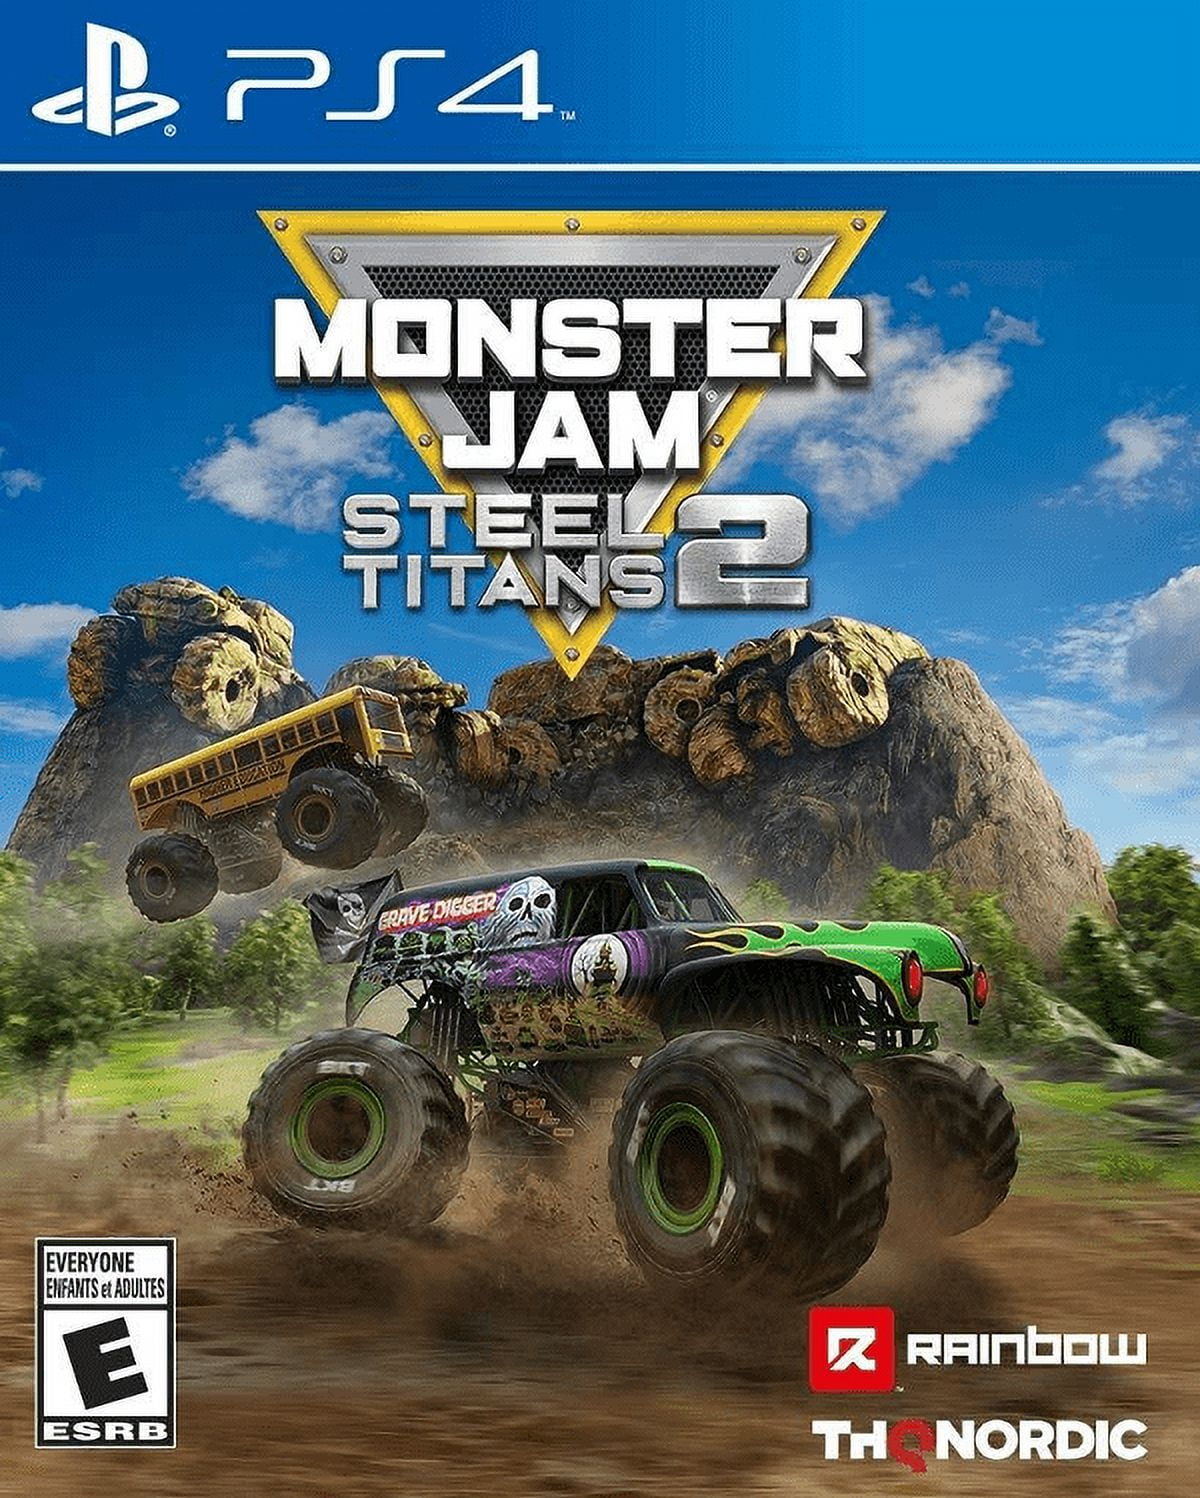 Monster Jam Steel Titans Video Game Review - Geeky Hobbies